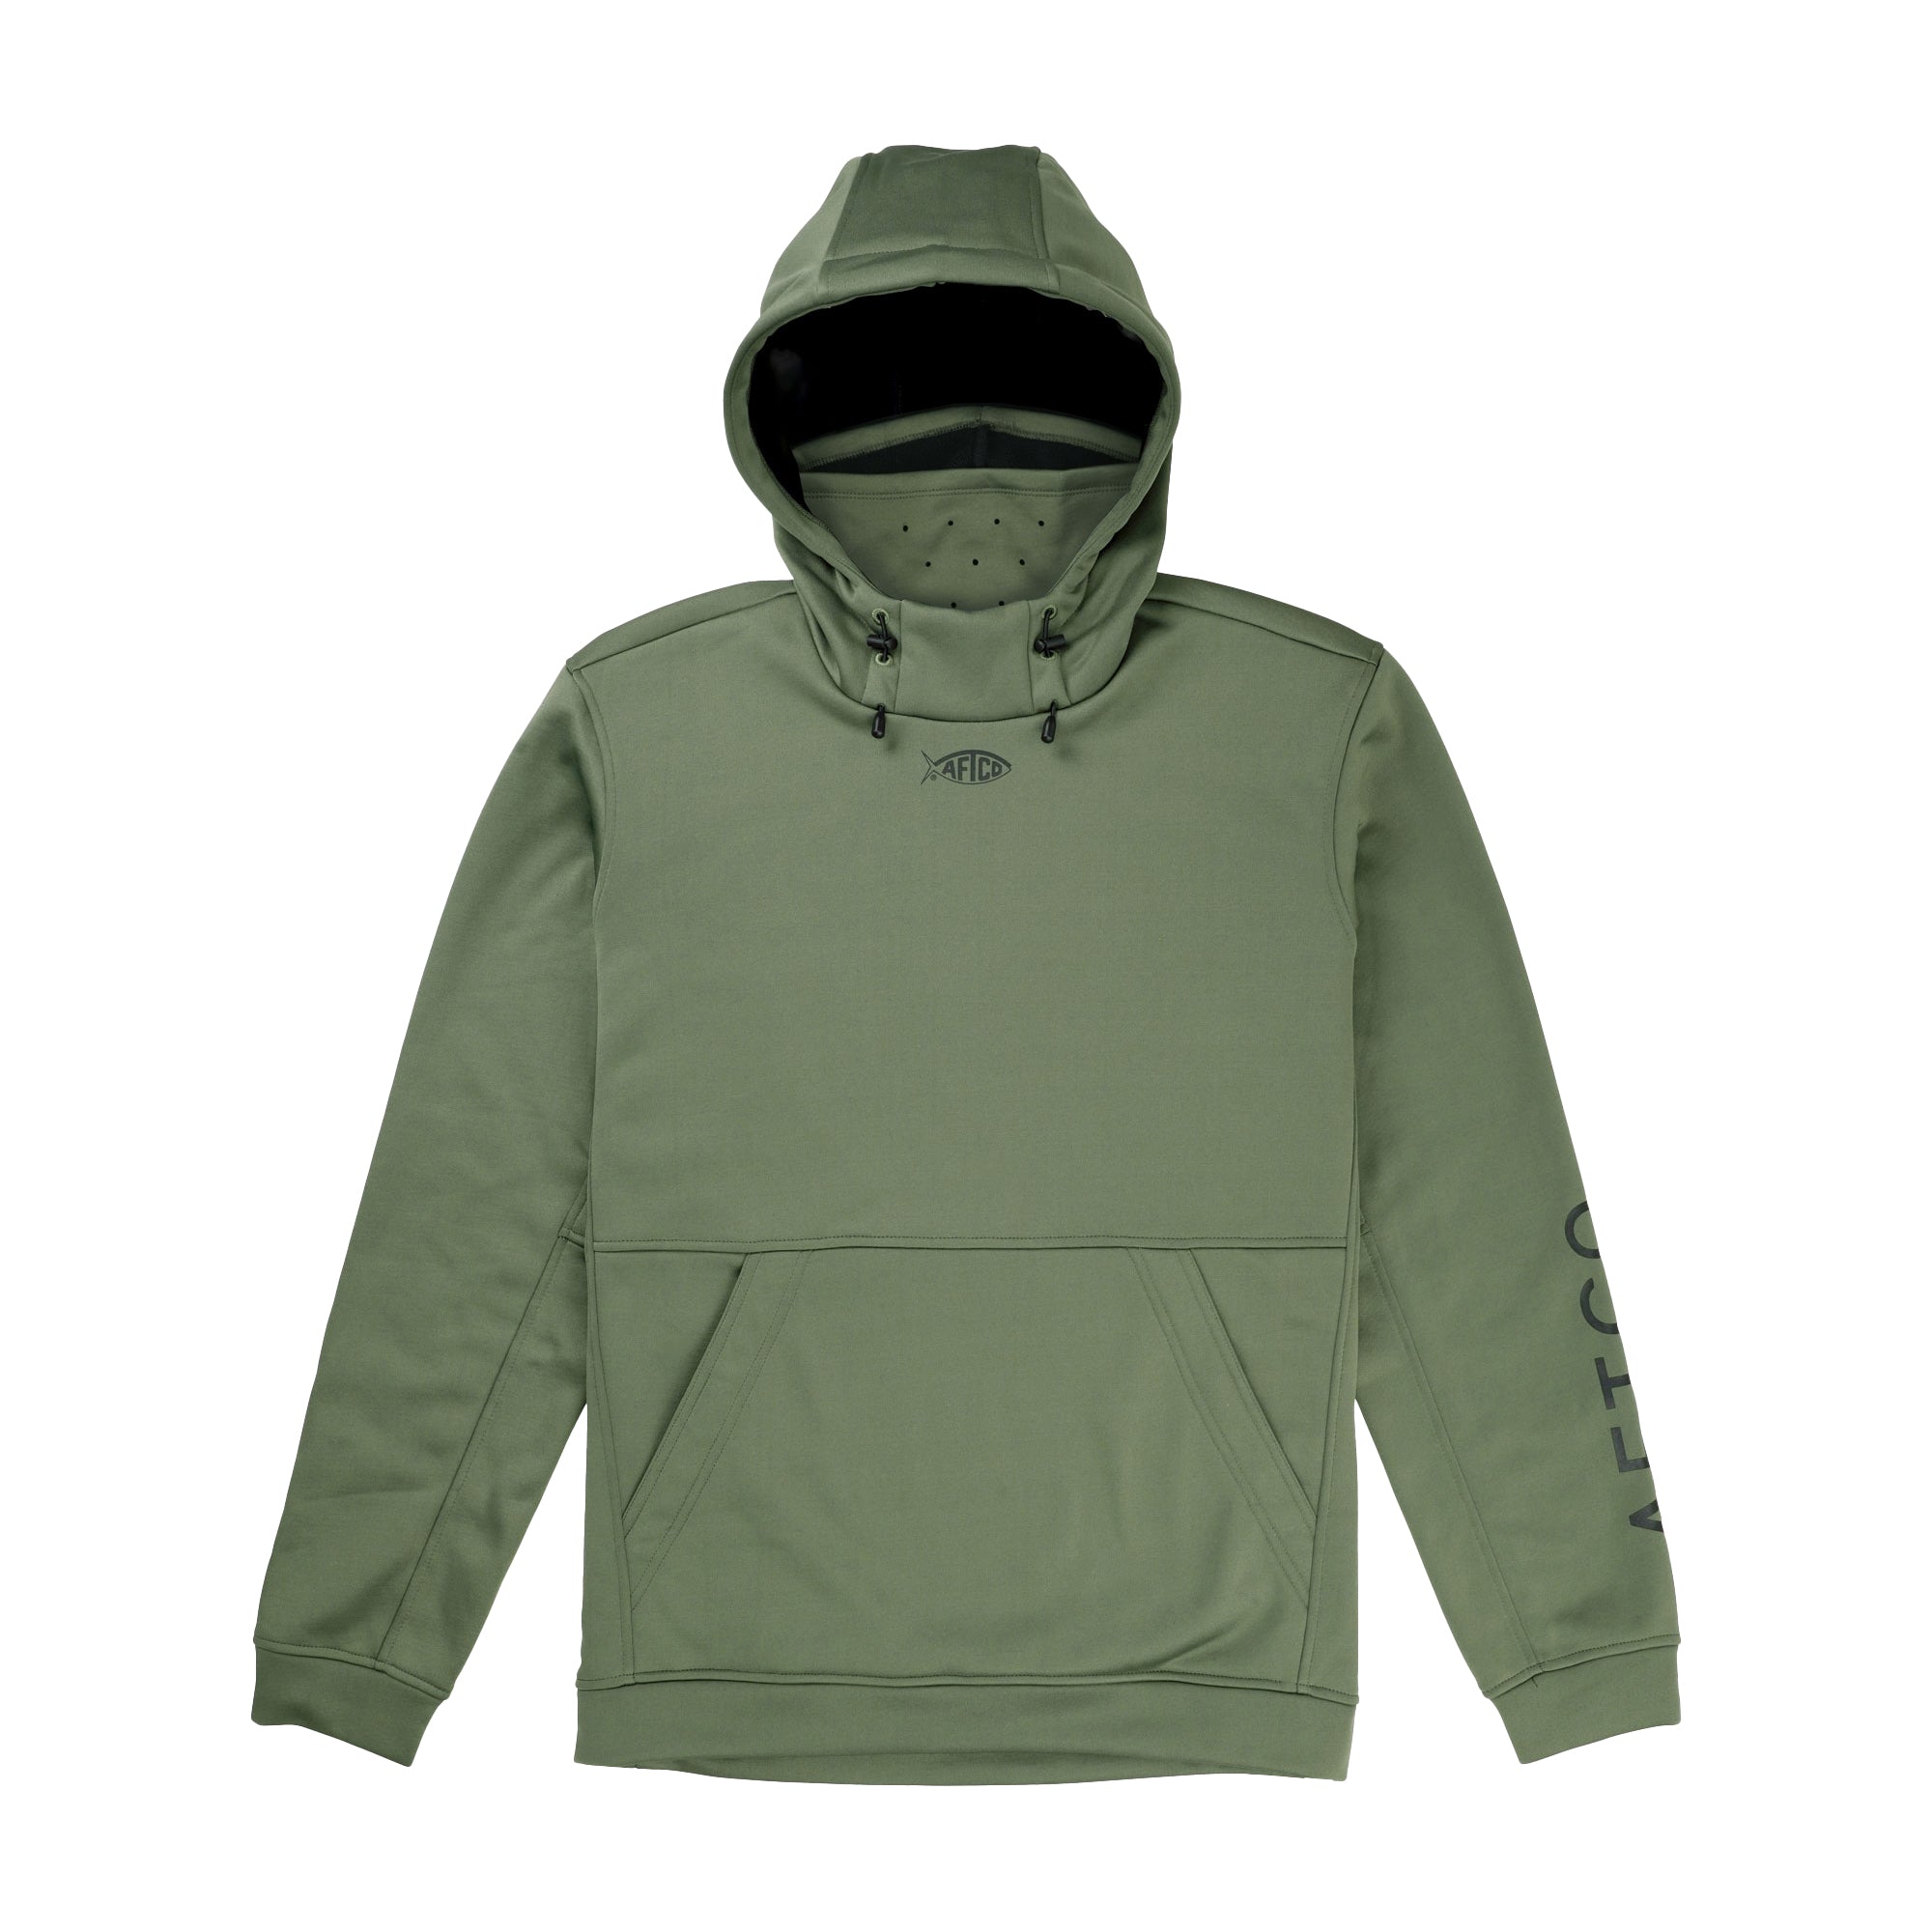 Shop Mens Hoodies & Sweatshirts Online - Fast Shipping & Easy